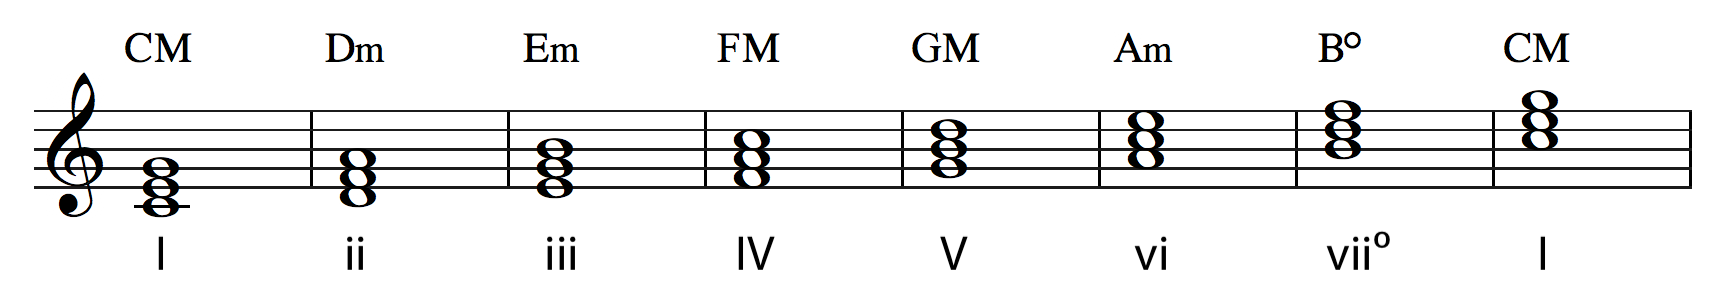 Harmonizing Scales & Roman Numeral Analysis — Kaitlin Bove Music